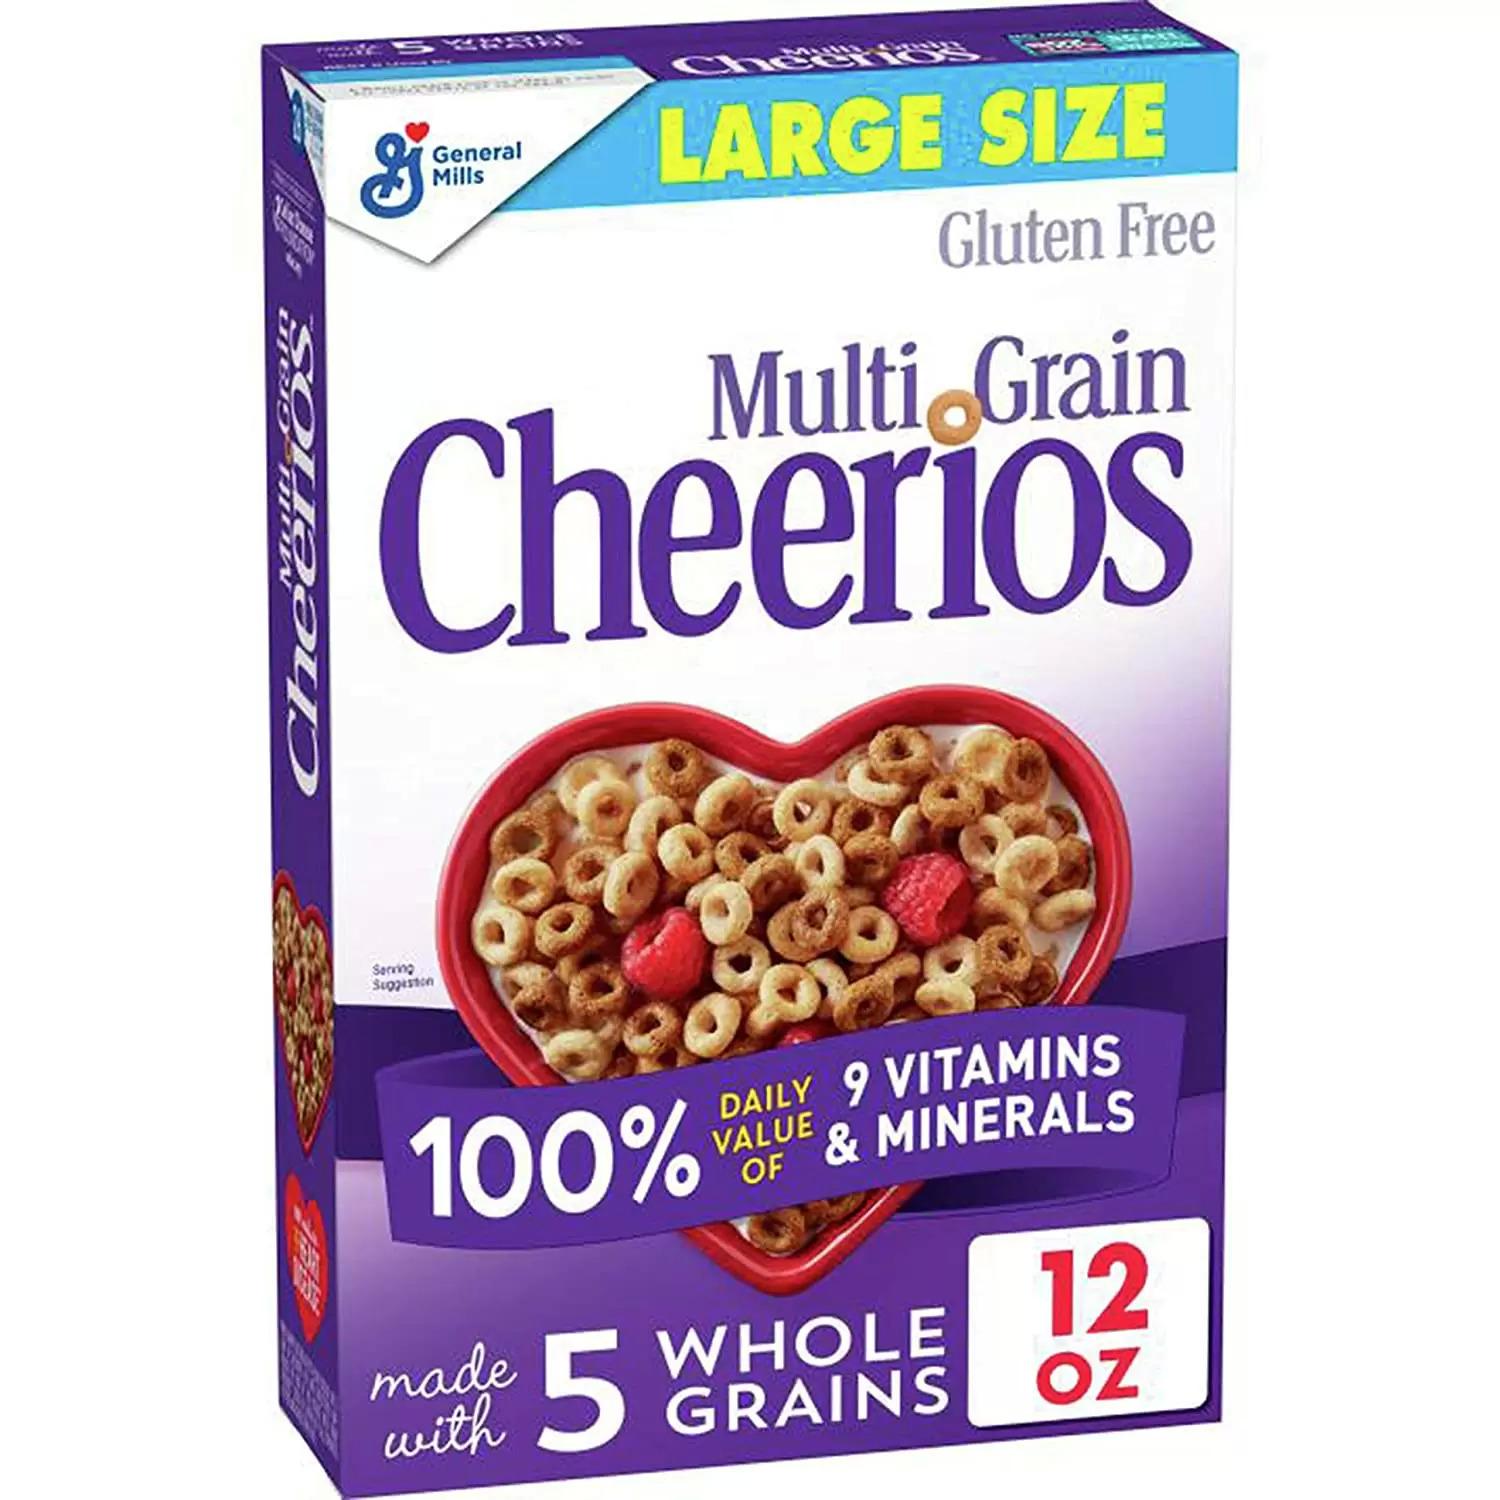  Multi Grain Cheerios Breakfast Cereal for $1.59